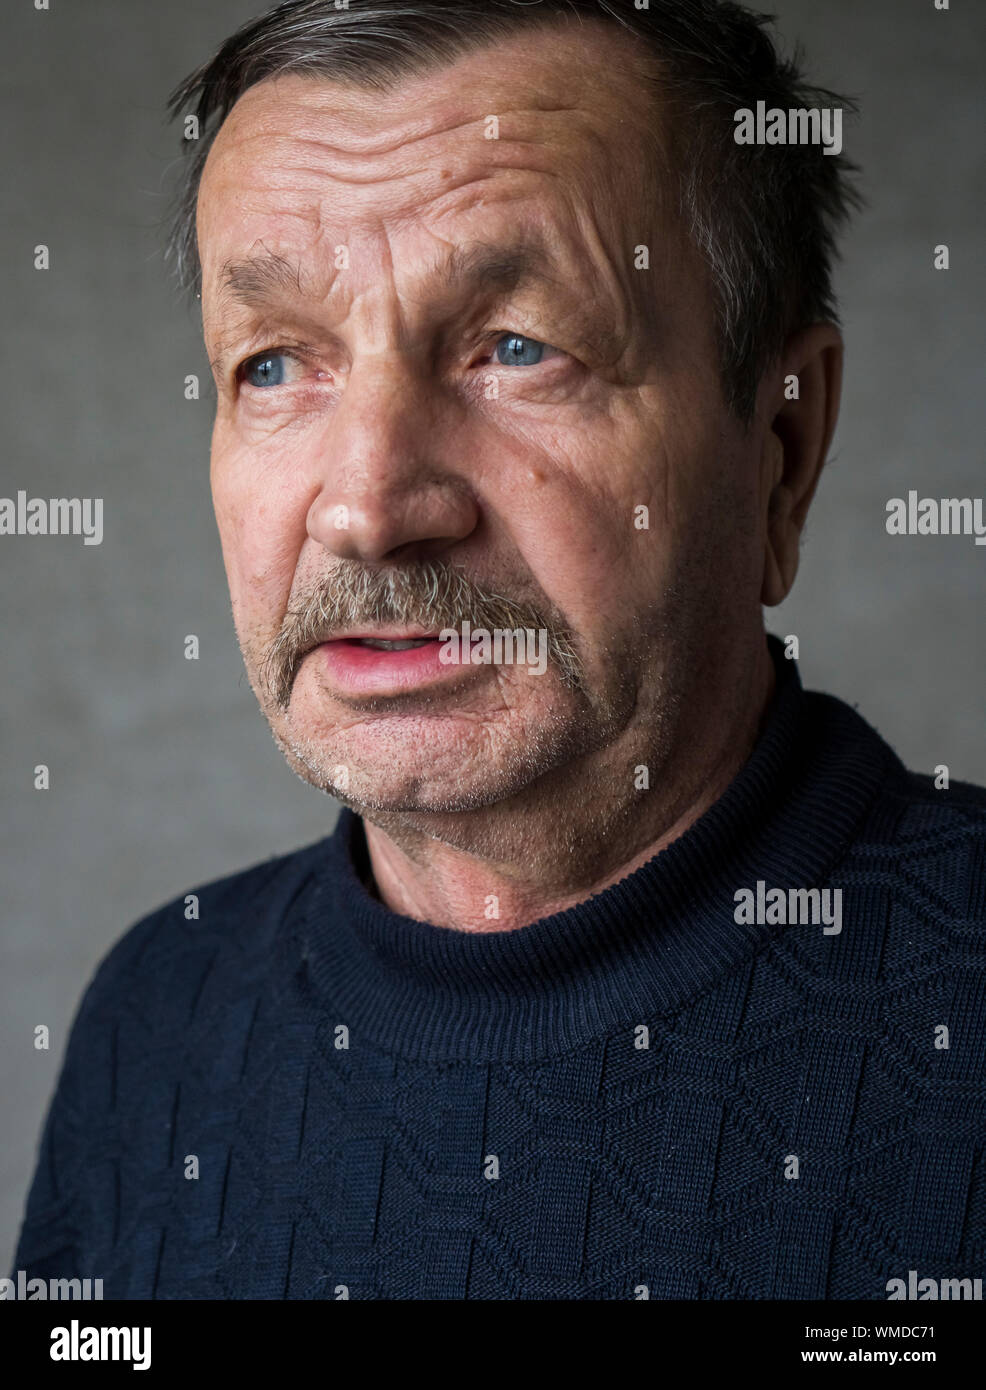 Senior Man Against Gray Background Stock Photo